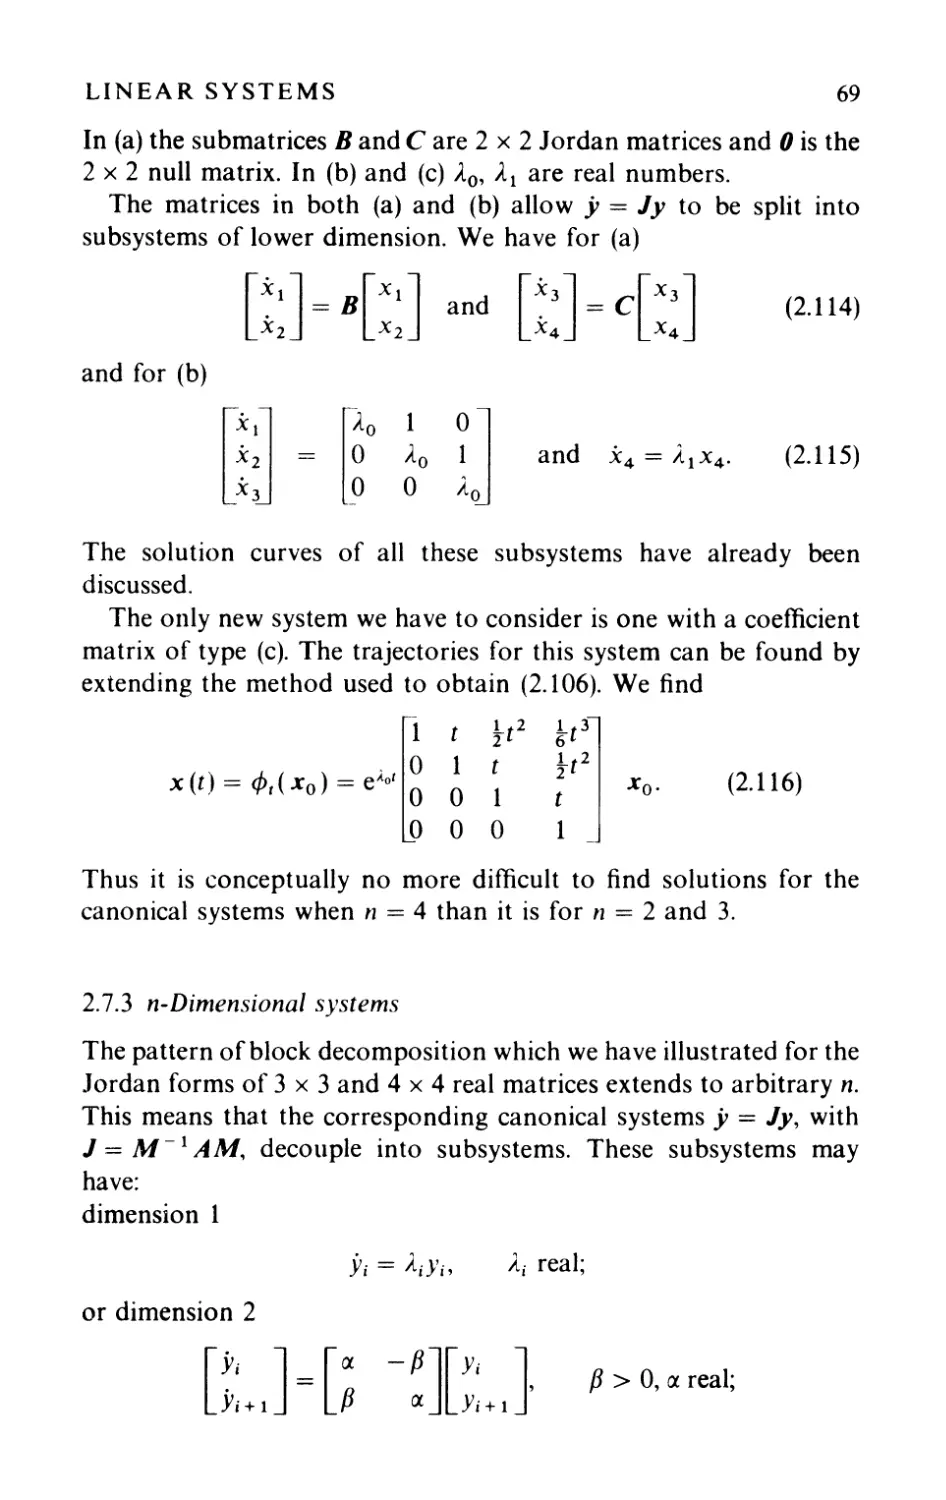 2.7.3 n-Dimensional systems